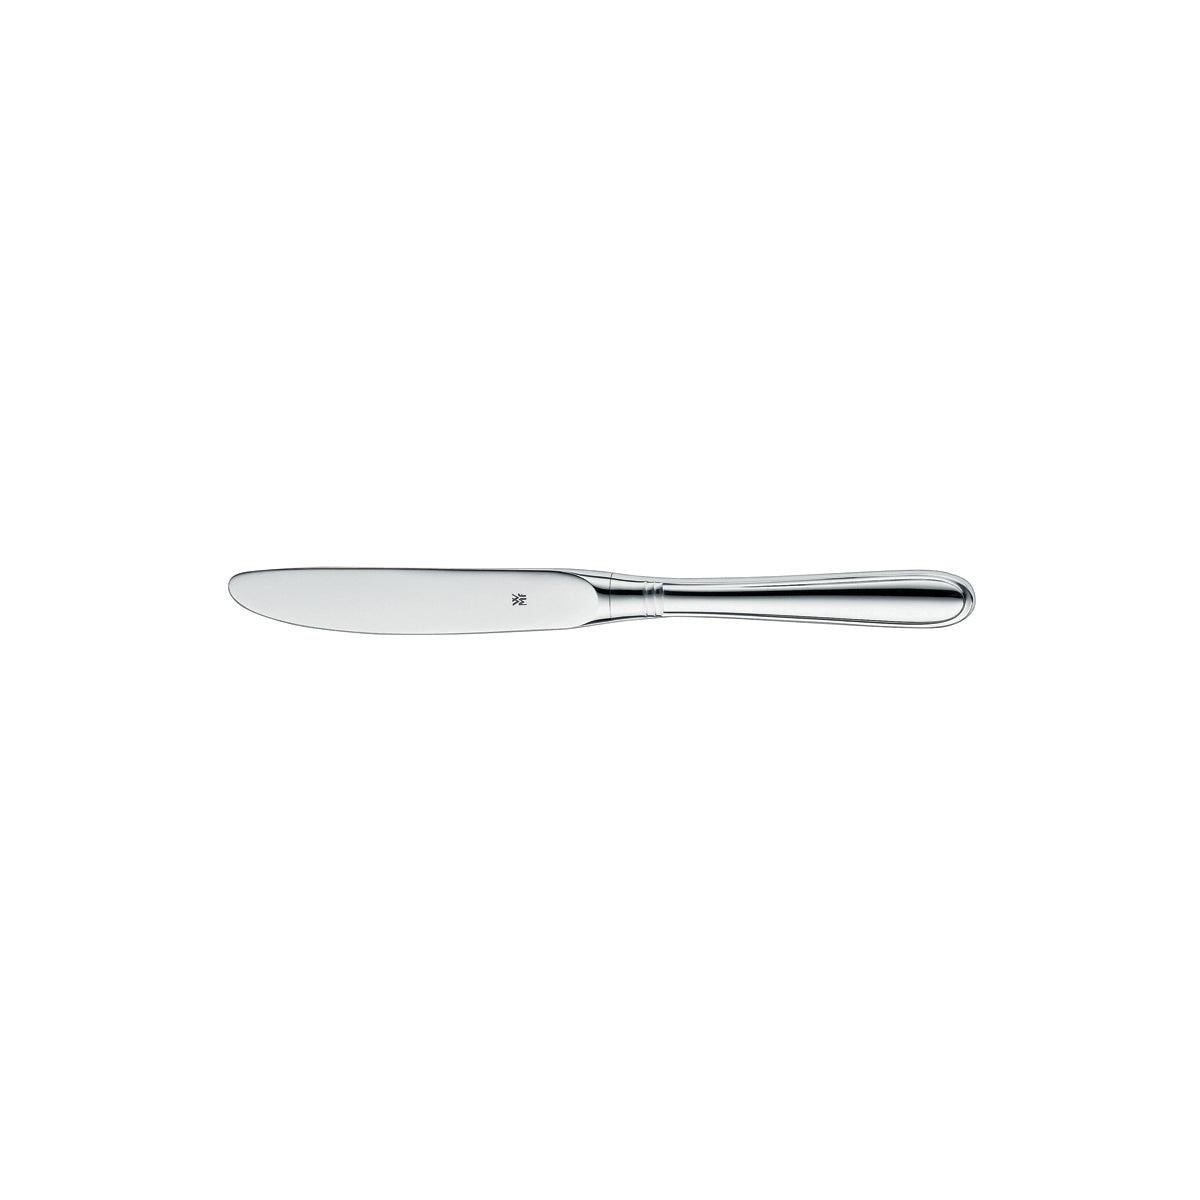 11.4703.6049 WMF Club Table Knife Stainless Steel Tomkin Australia Hospitality Supplies